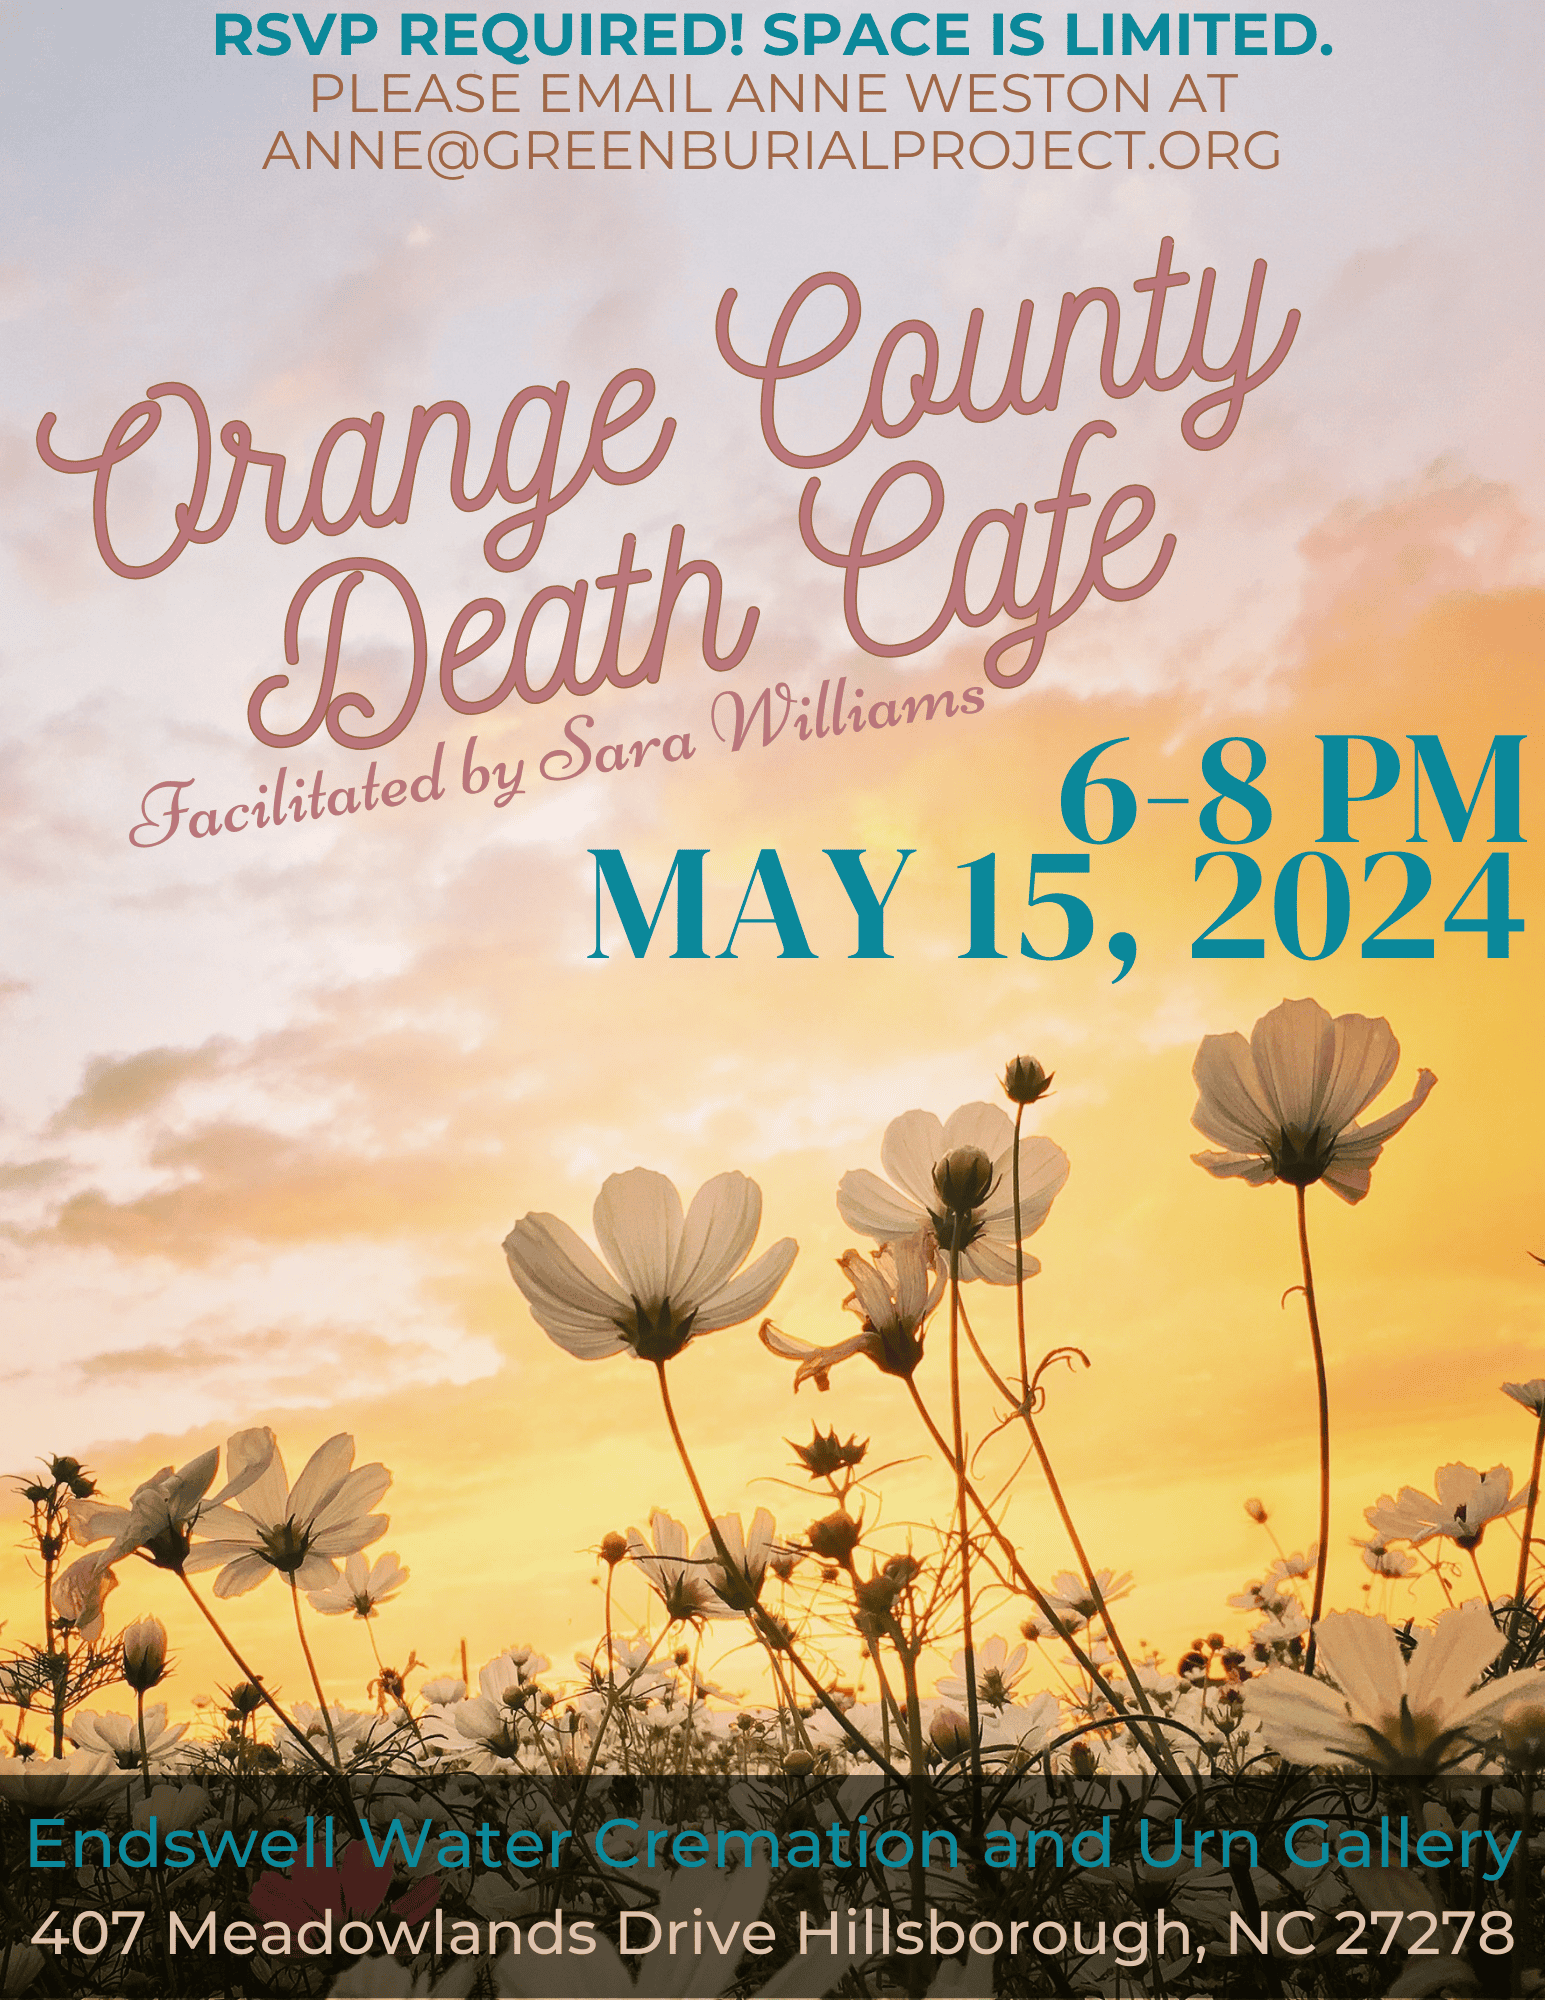 5/15/24 – Orange County Death Cafe